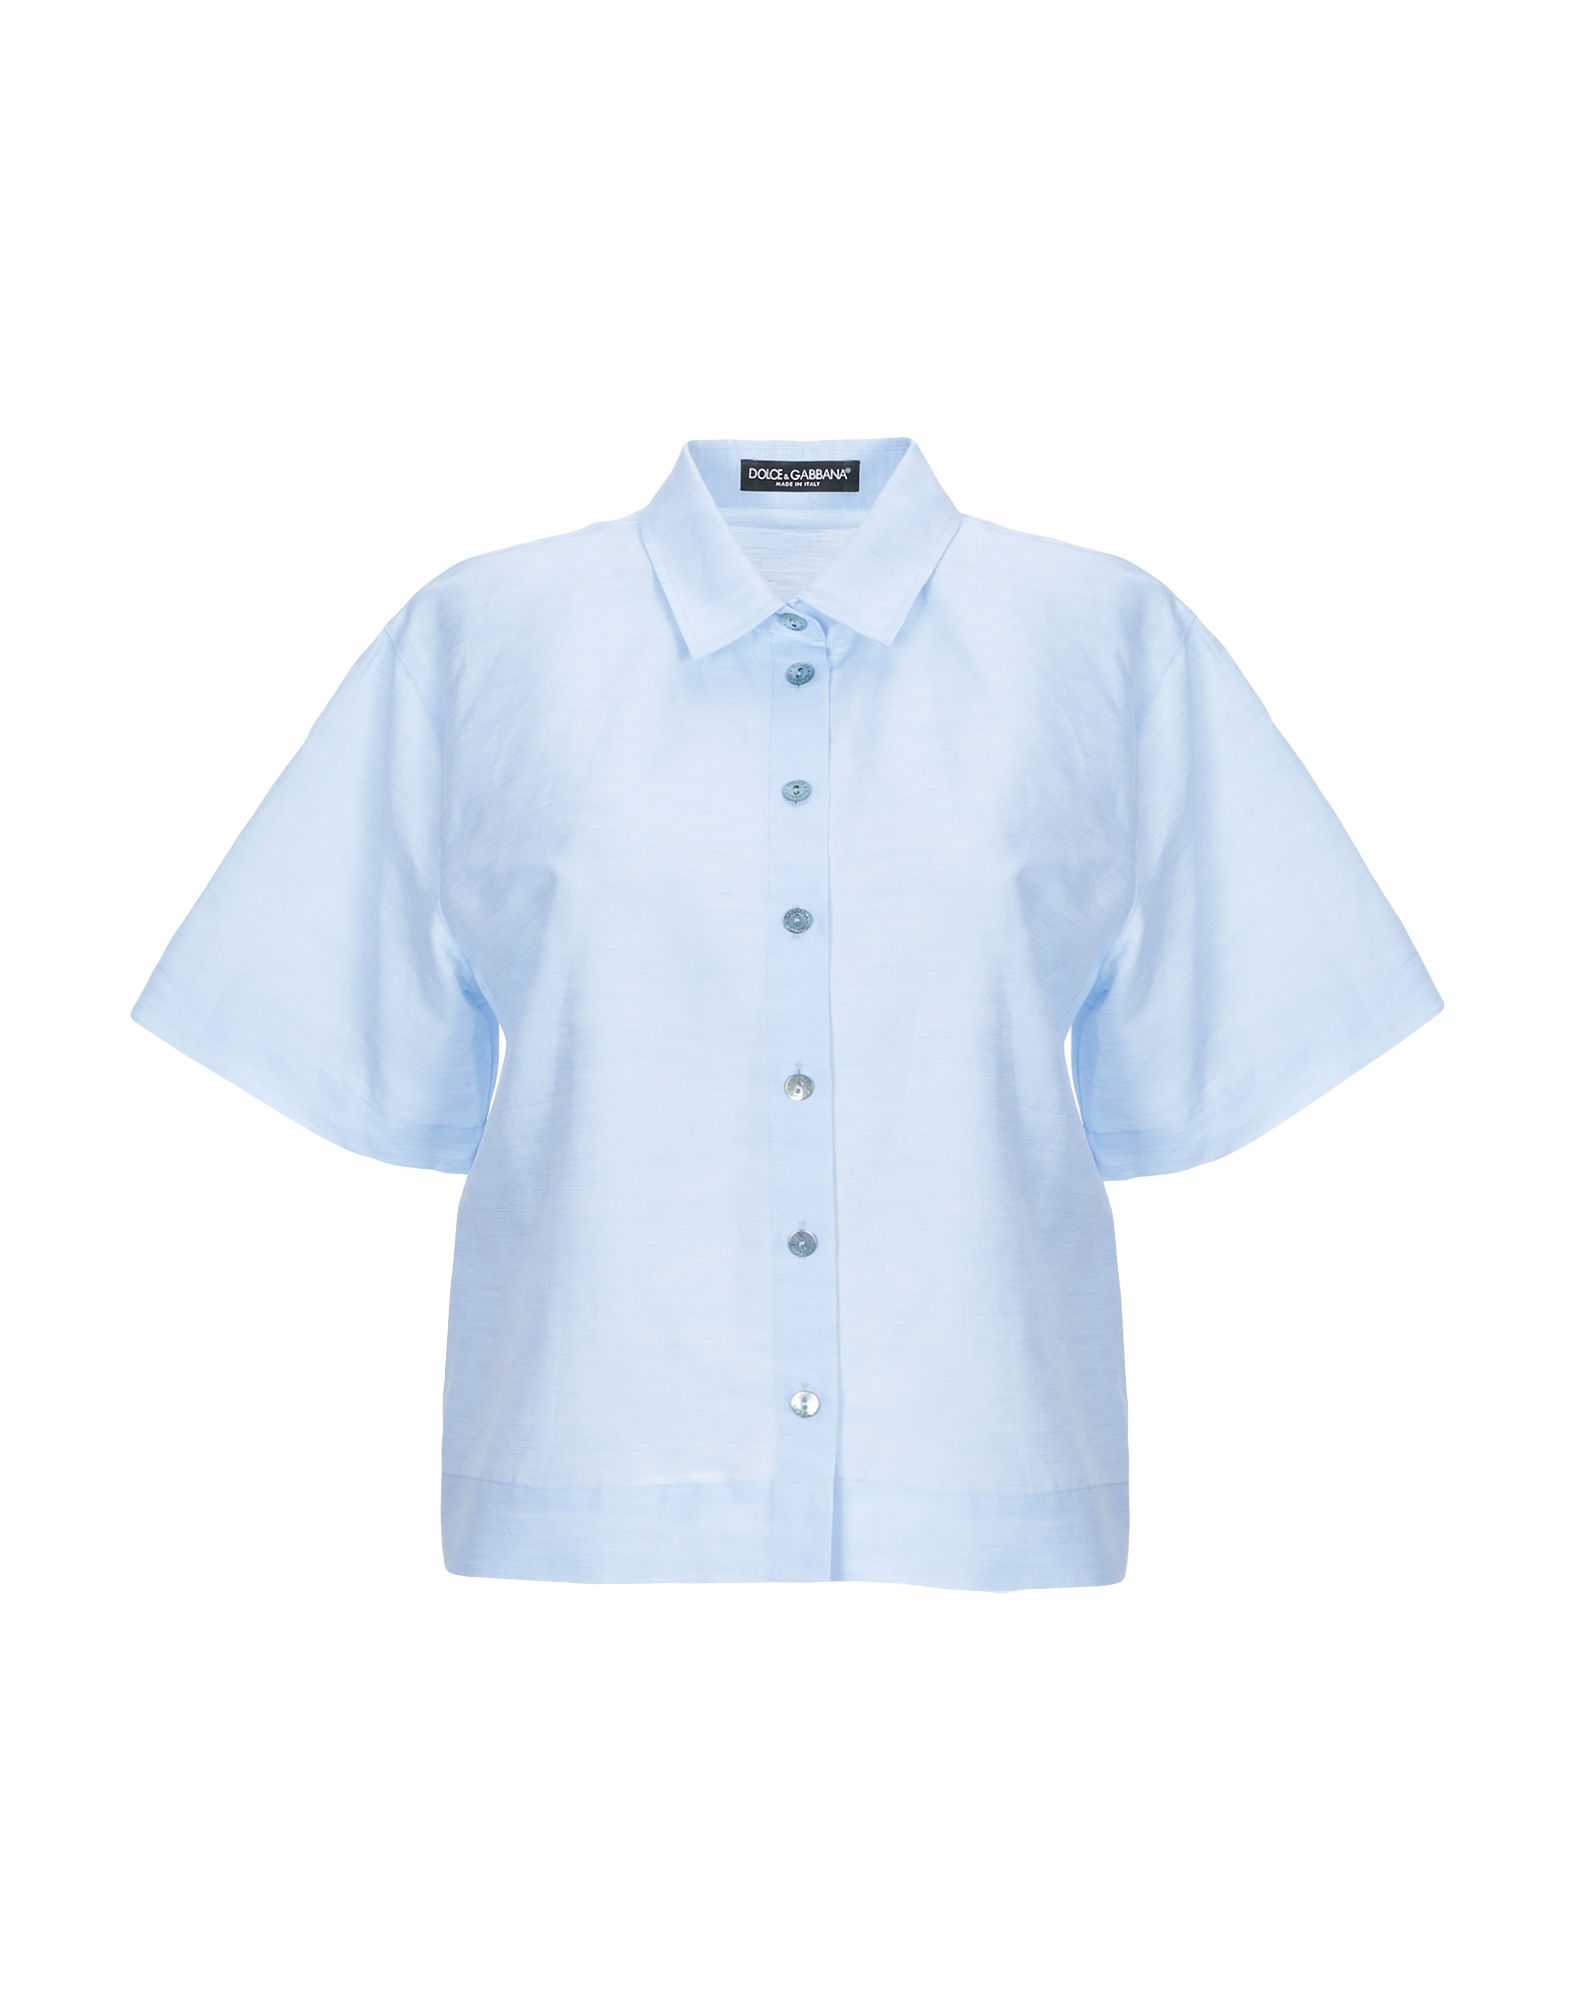 DOLCE & GABBANA Linen shirt,38835888SH 3